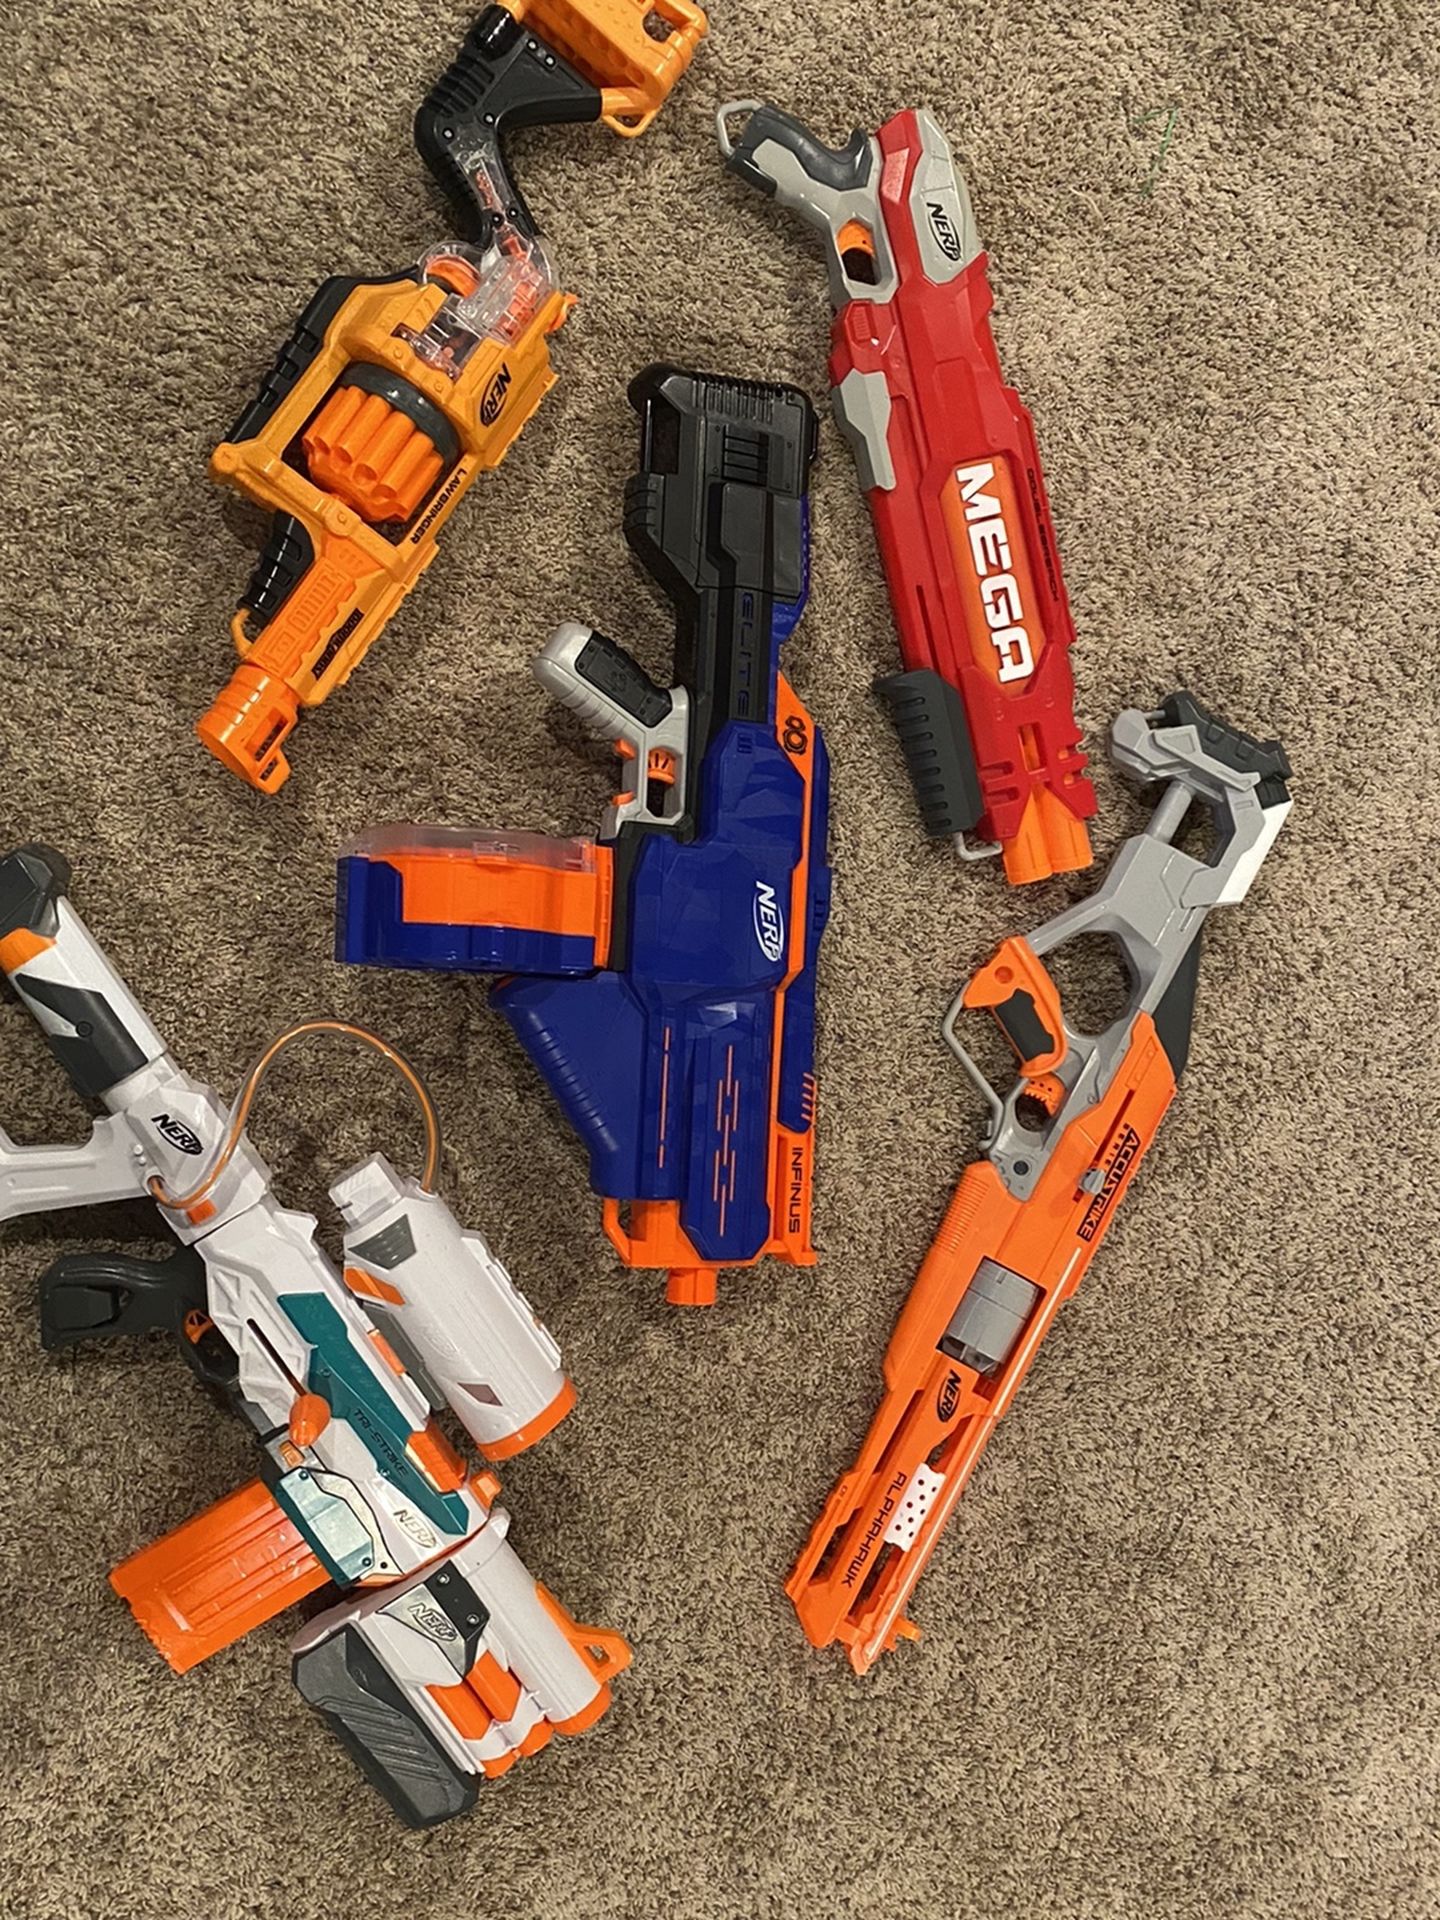 Lot Of Nerf Guns